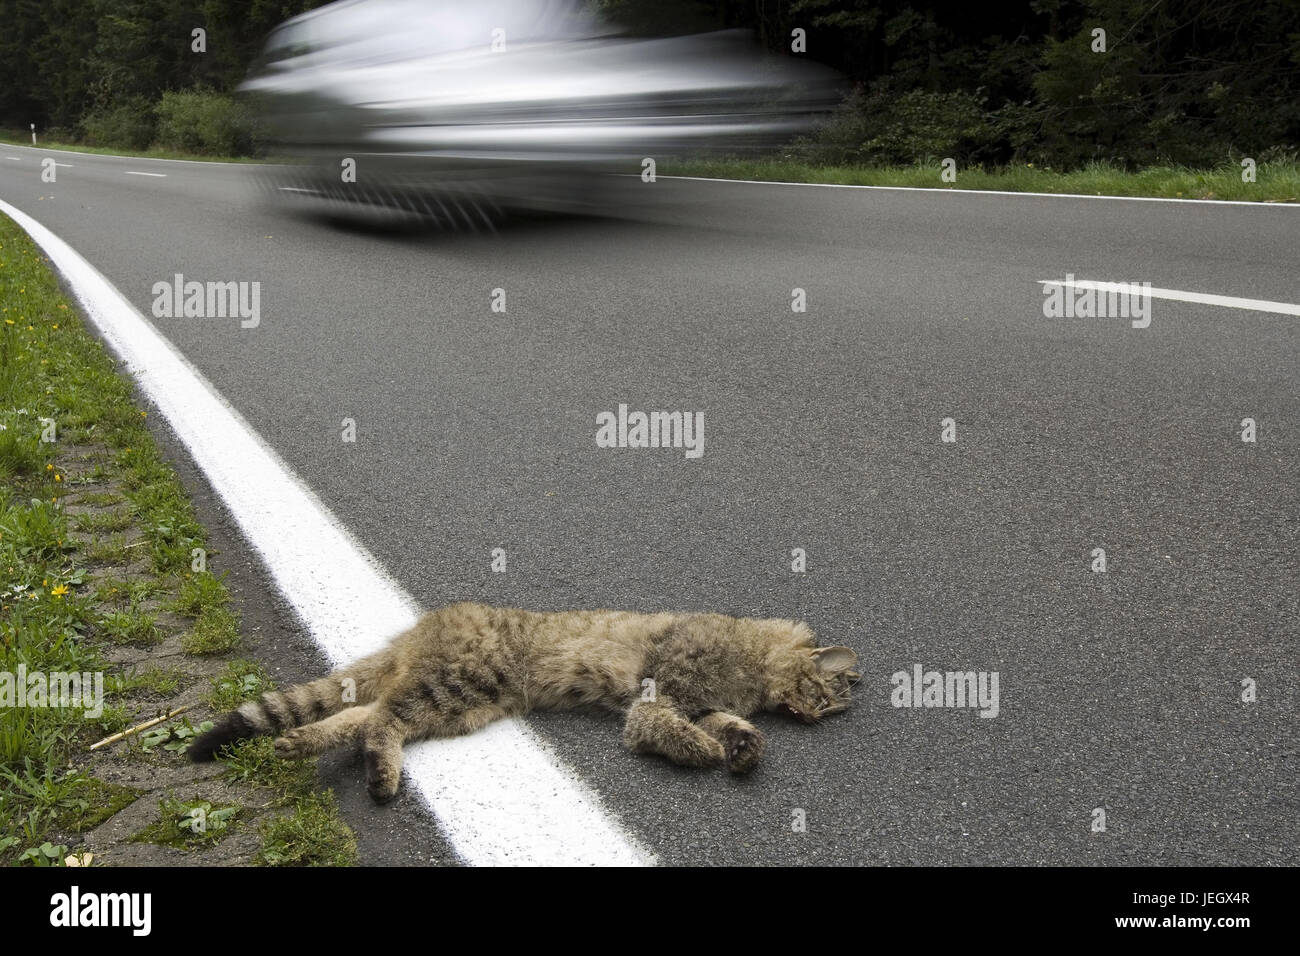 Dead cat in the street edge, Tote Katze am Strassenrand Stock Photo